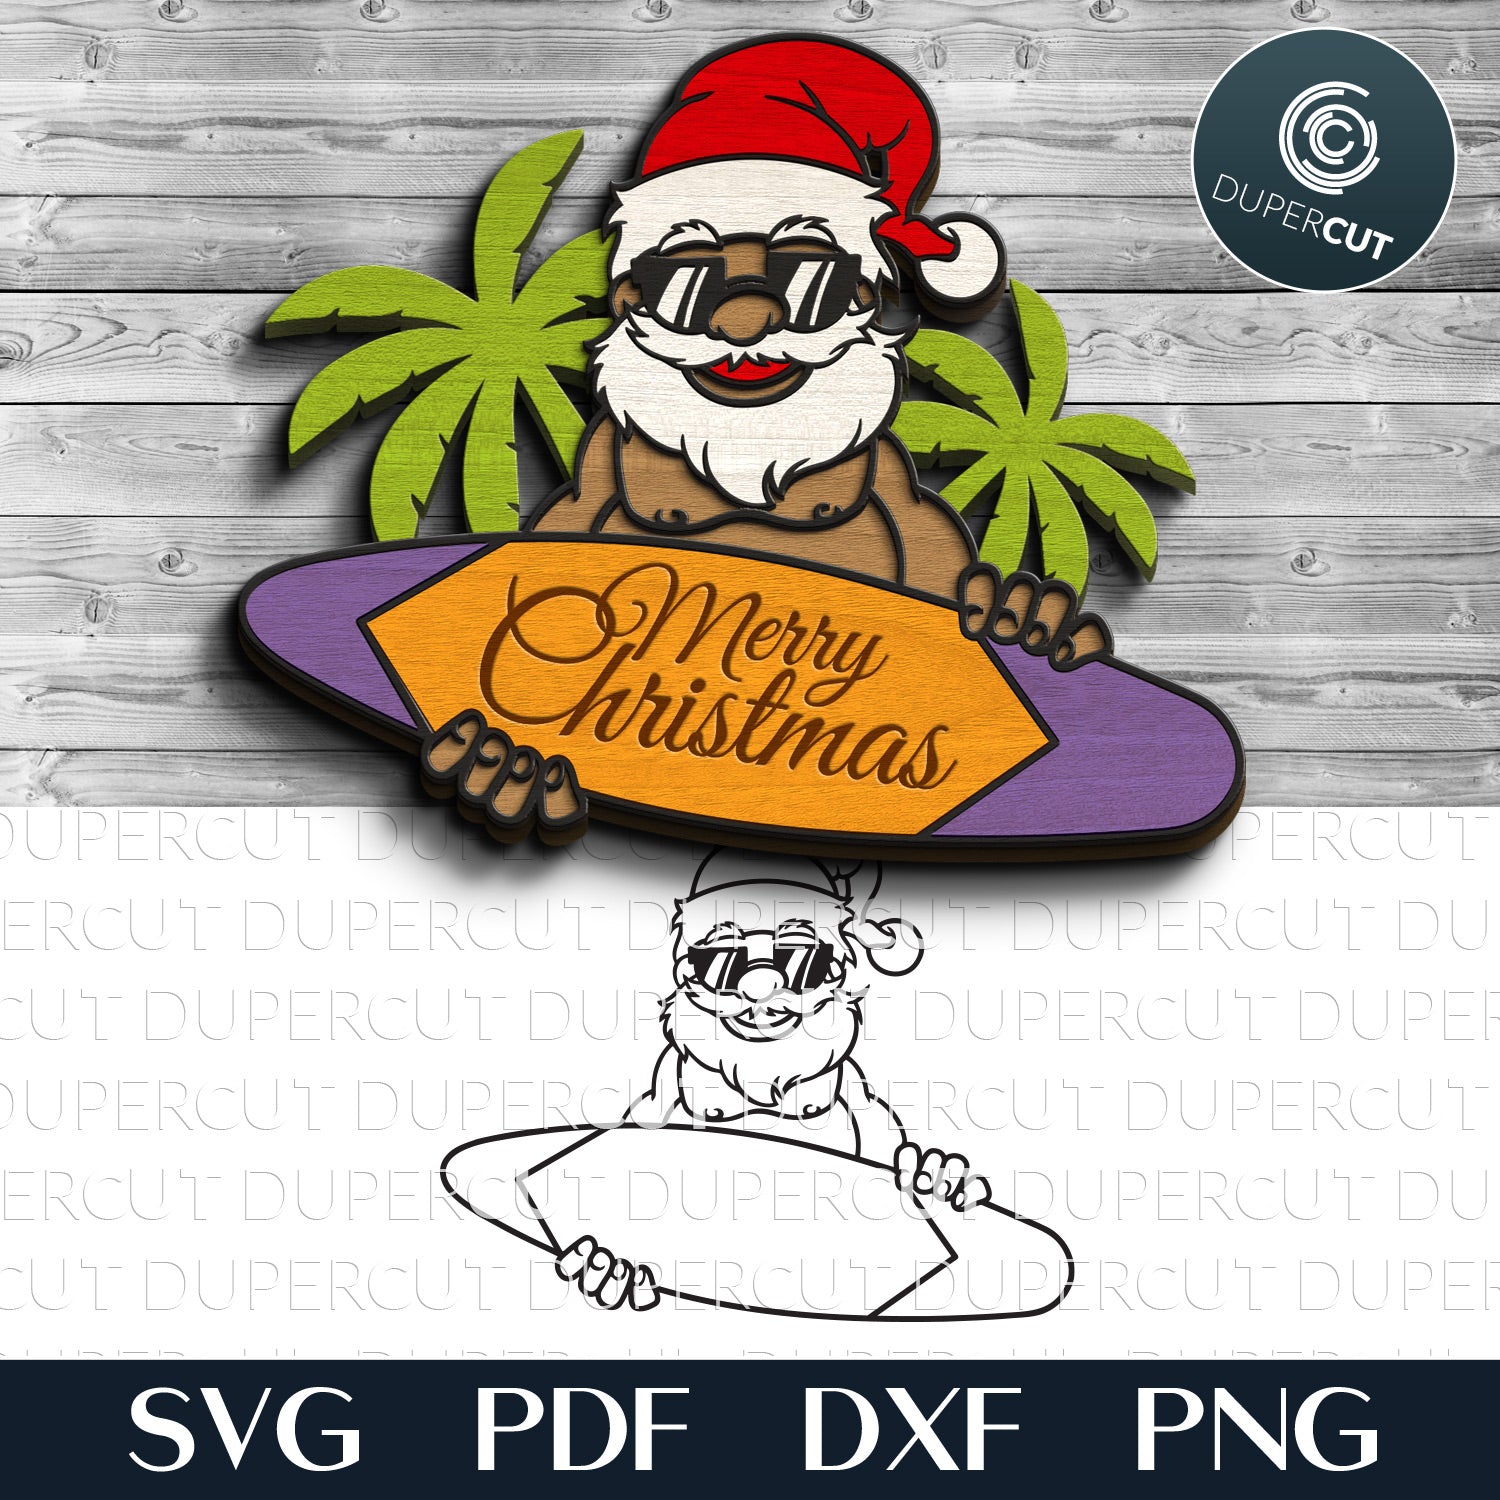 Suerfer Santa funny Christmas sign - SVG DXF layered cutting files for laser Glowforge, X-tool, Cricut, CNC plasma machines, scroll saw pattern by www.DuperCut.com